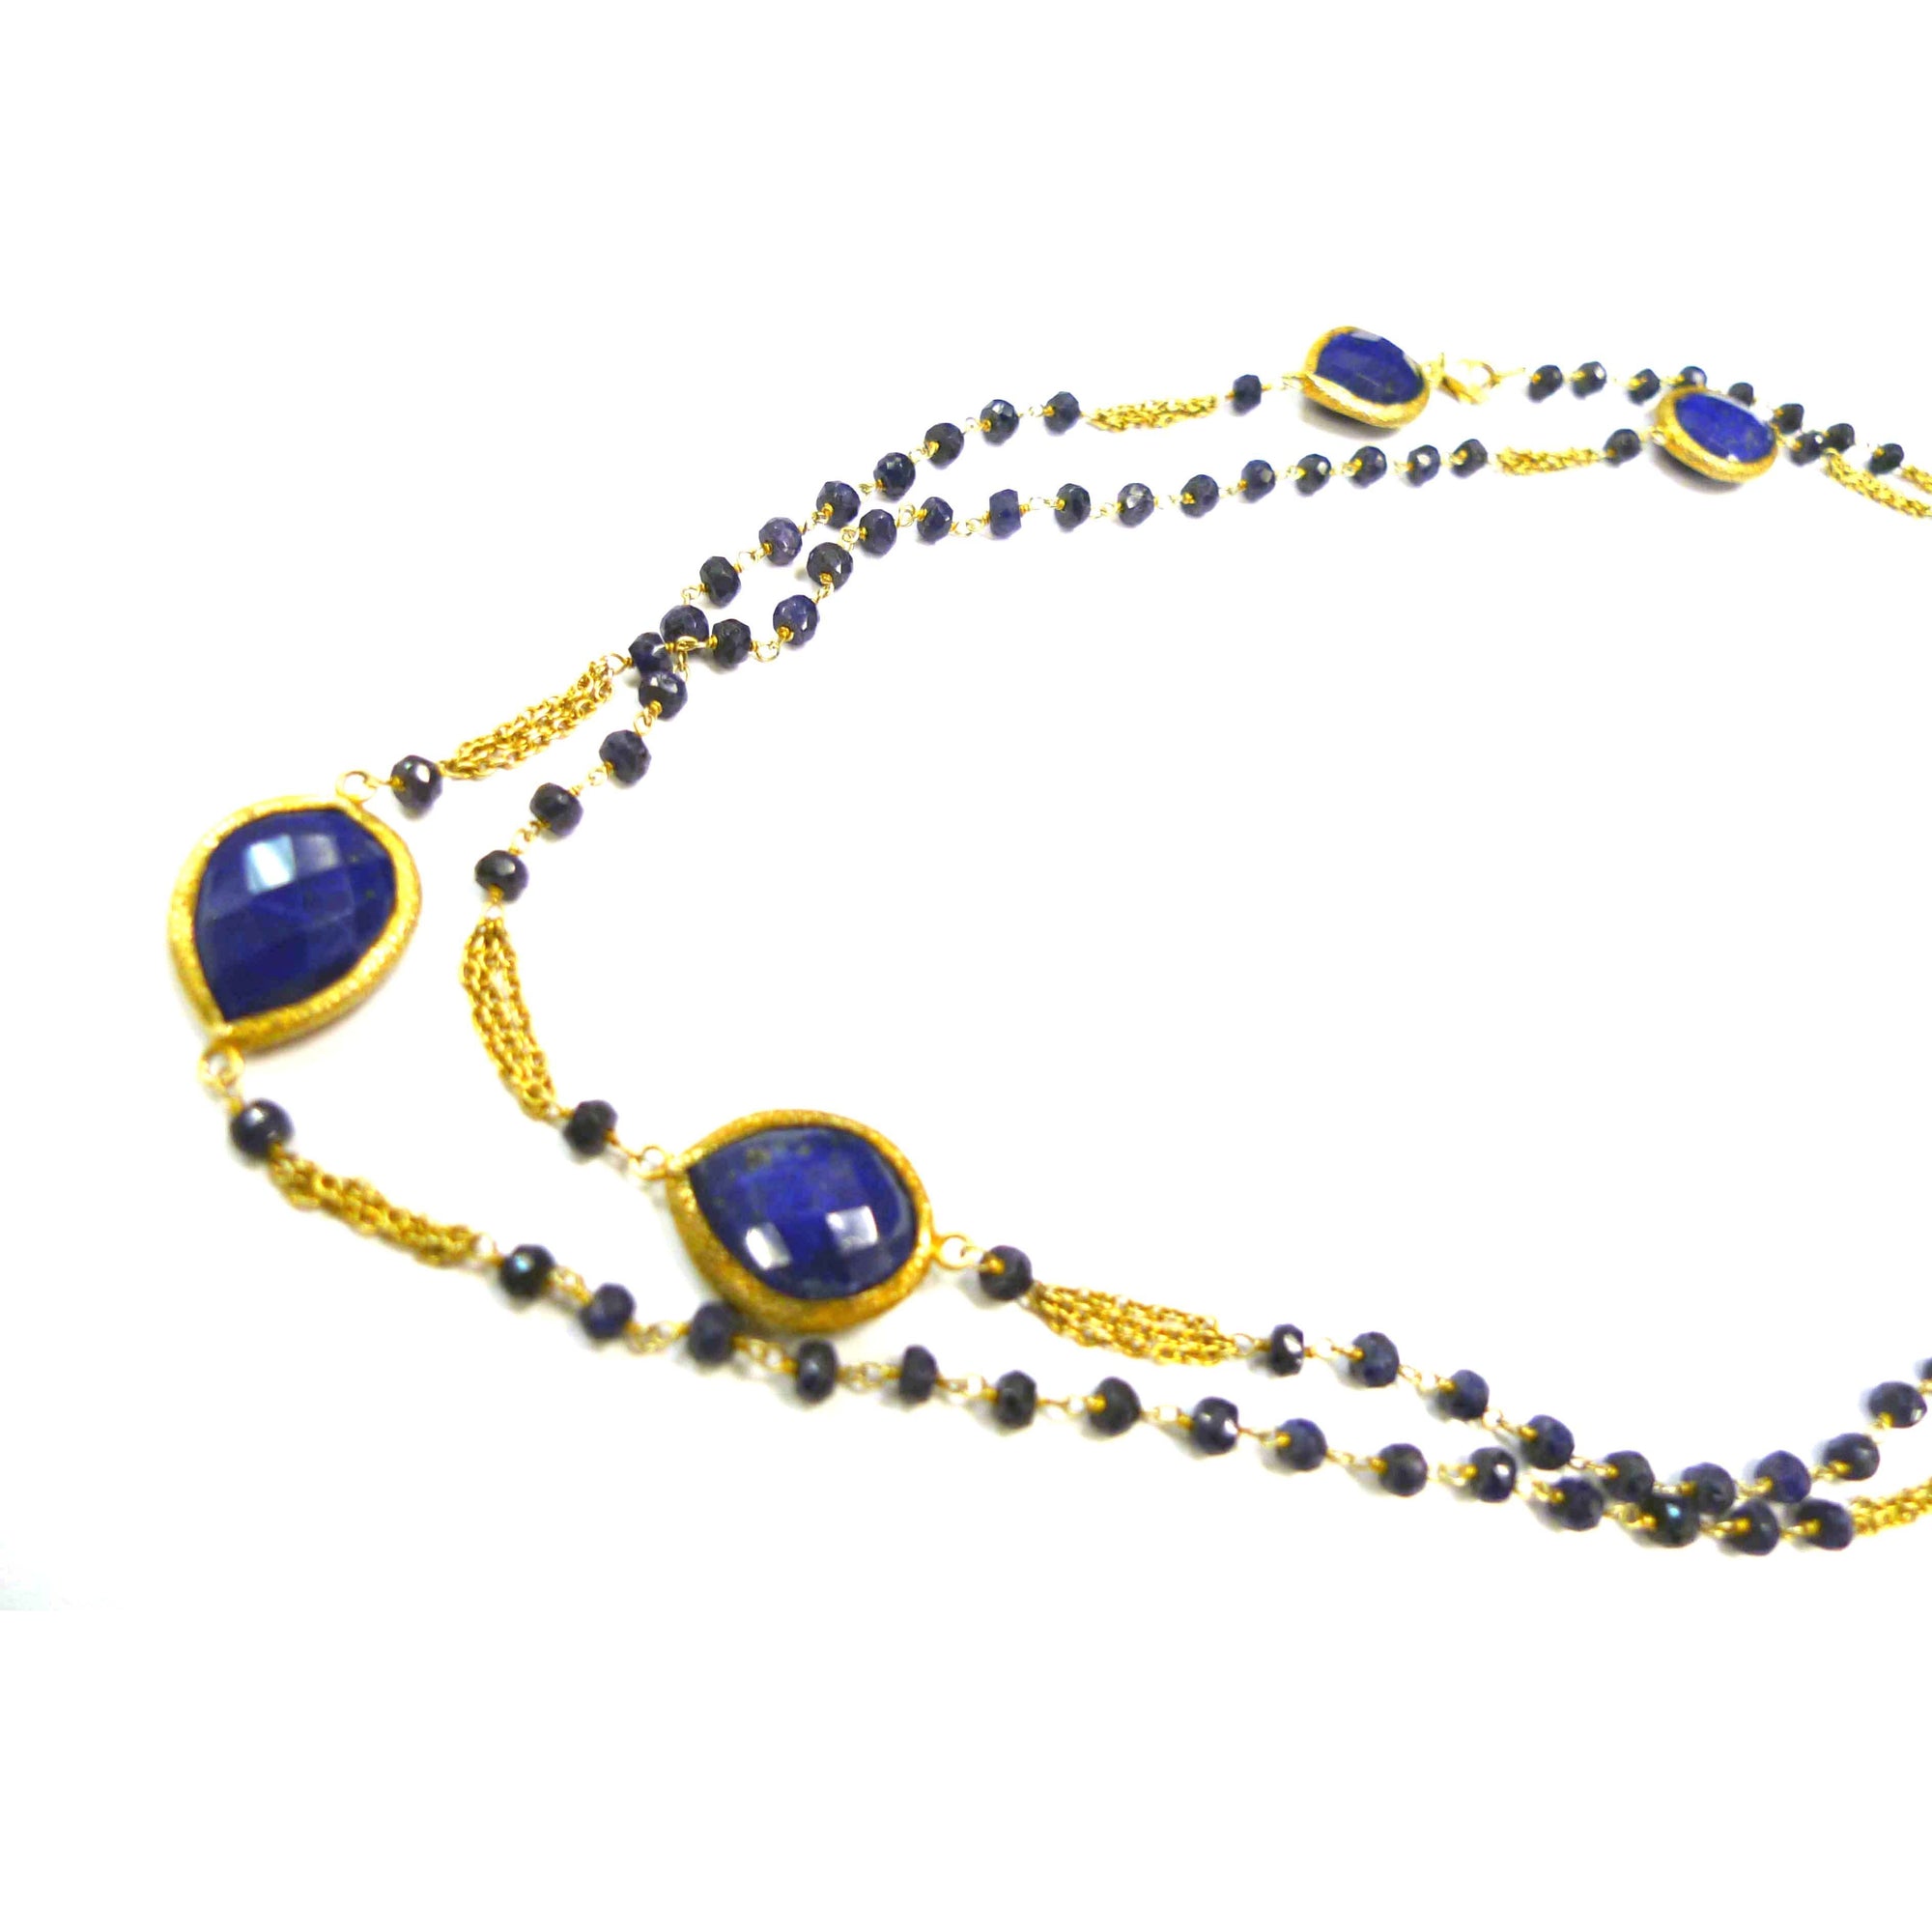 Designer Old Cut Necklace - Lapis Lazuli